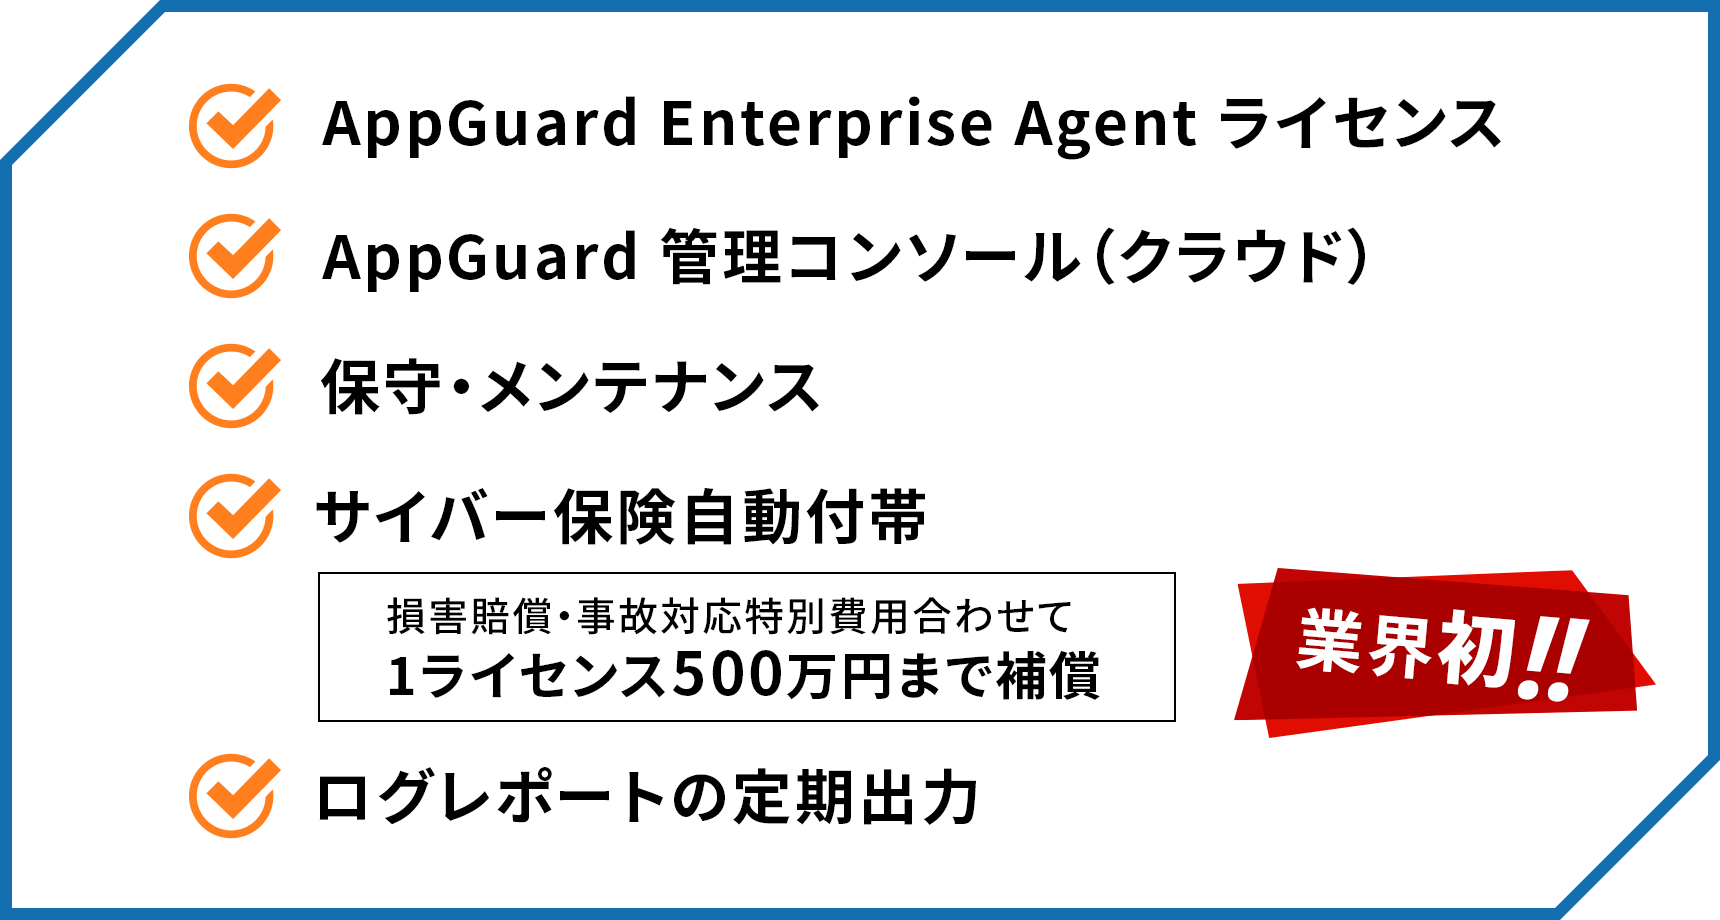 APPGUARD Enterprise Agent ライセンス・APPGUARD 管理コンソール（クラウド）・保守・メンテナンス・ITガード専用サイバー保険 自動付帯・ログレポートの定期出力